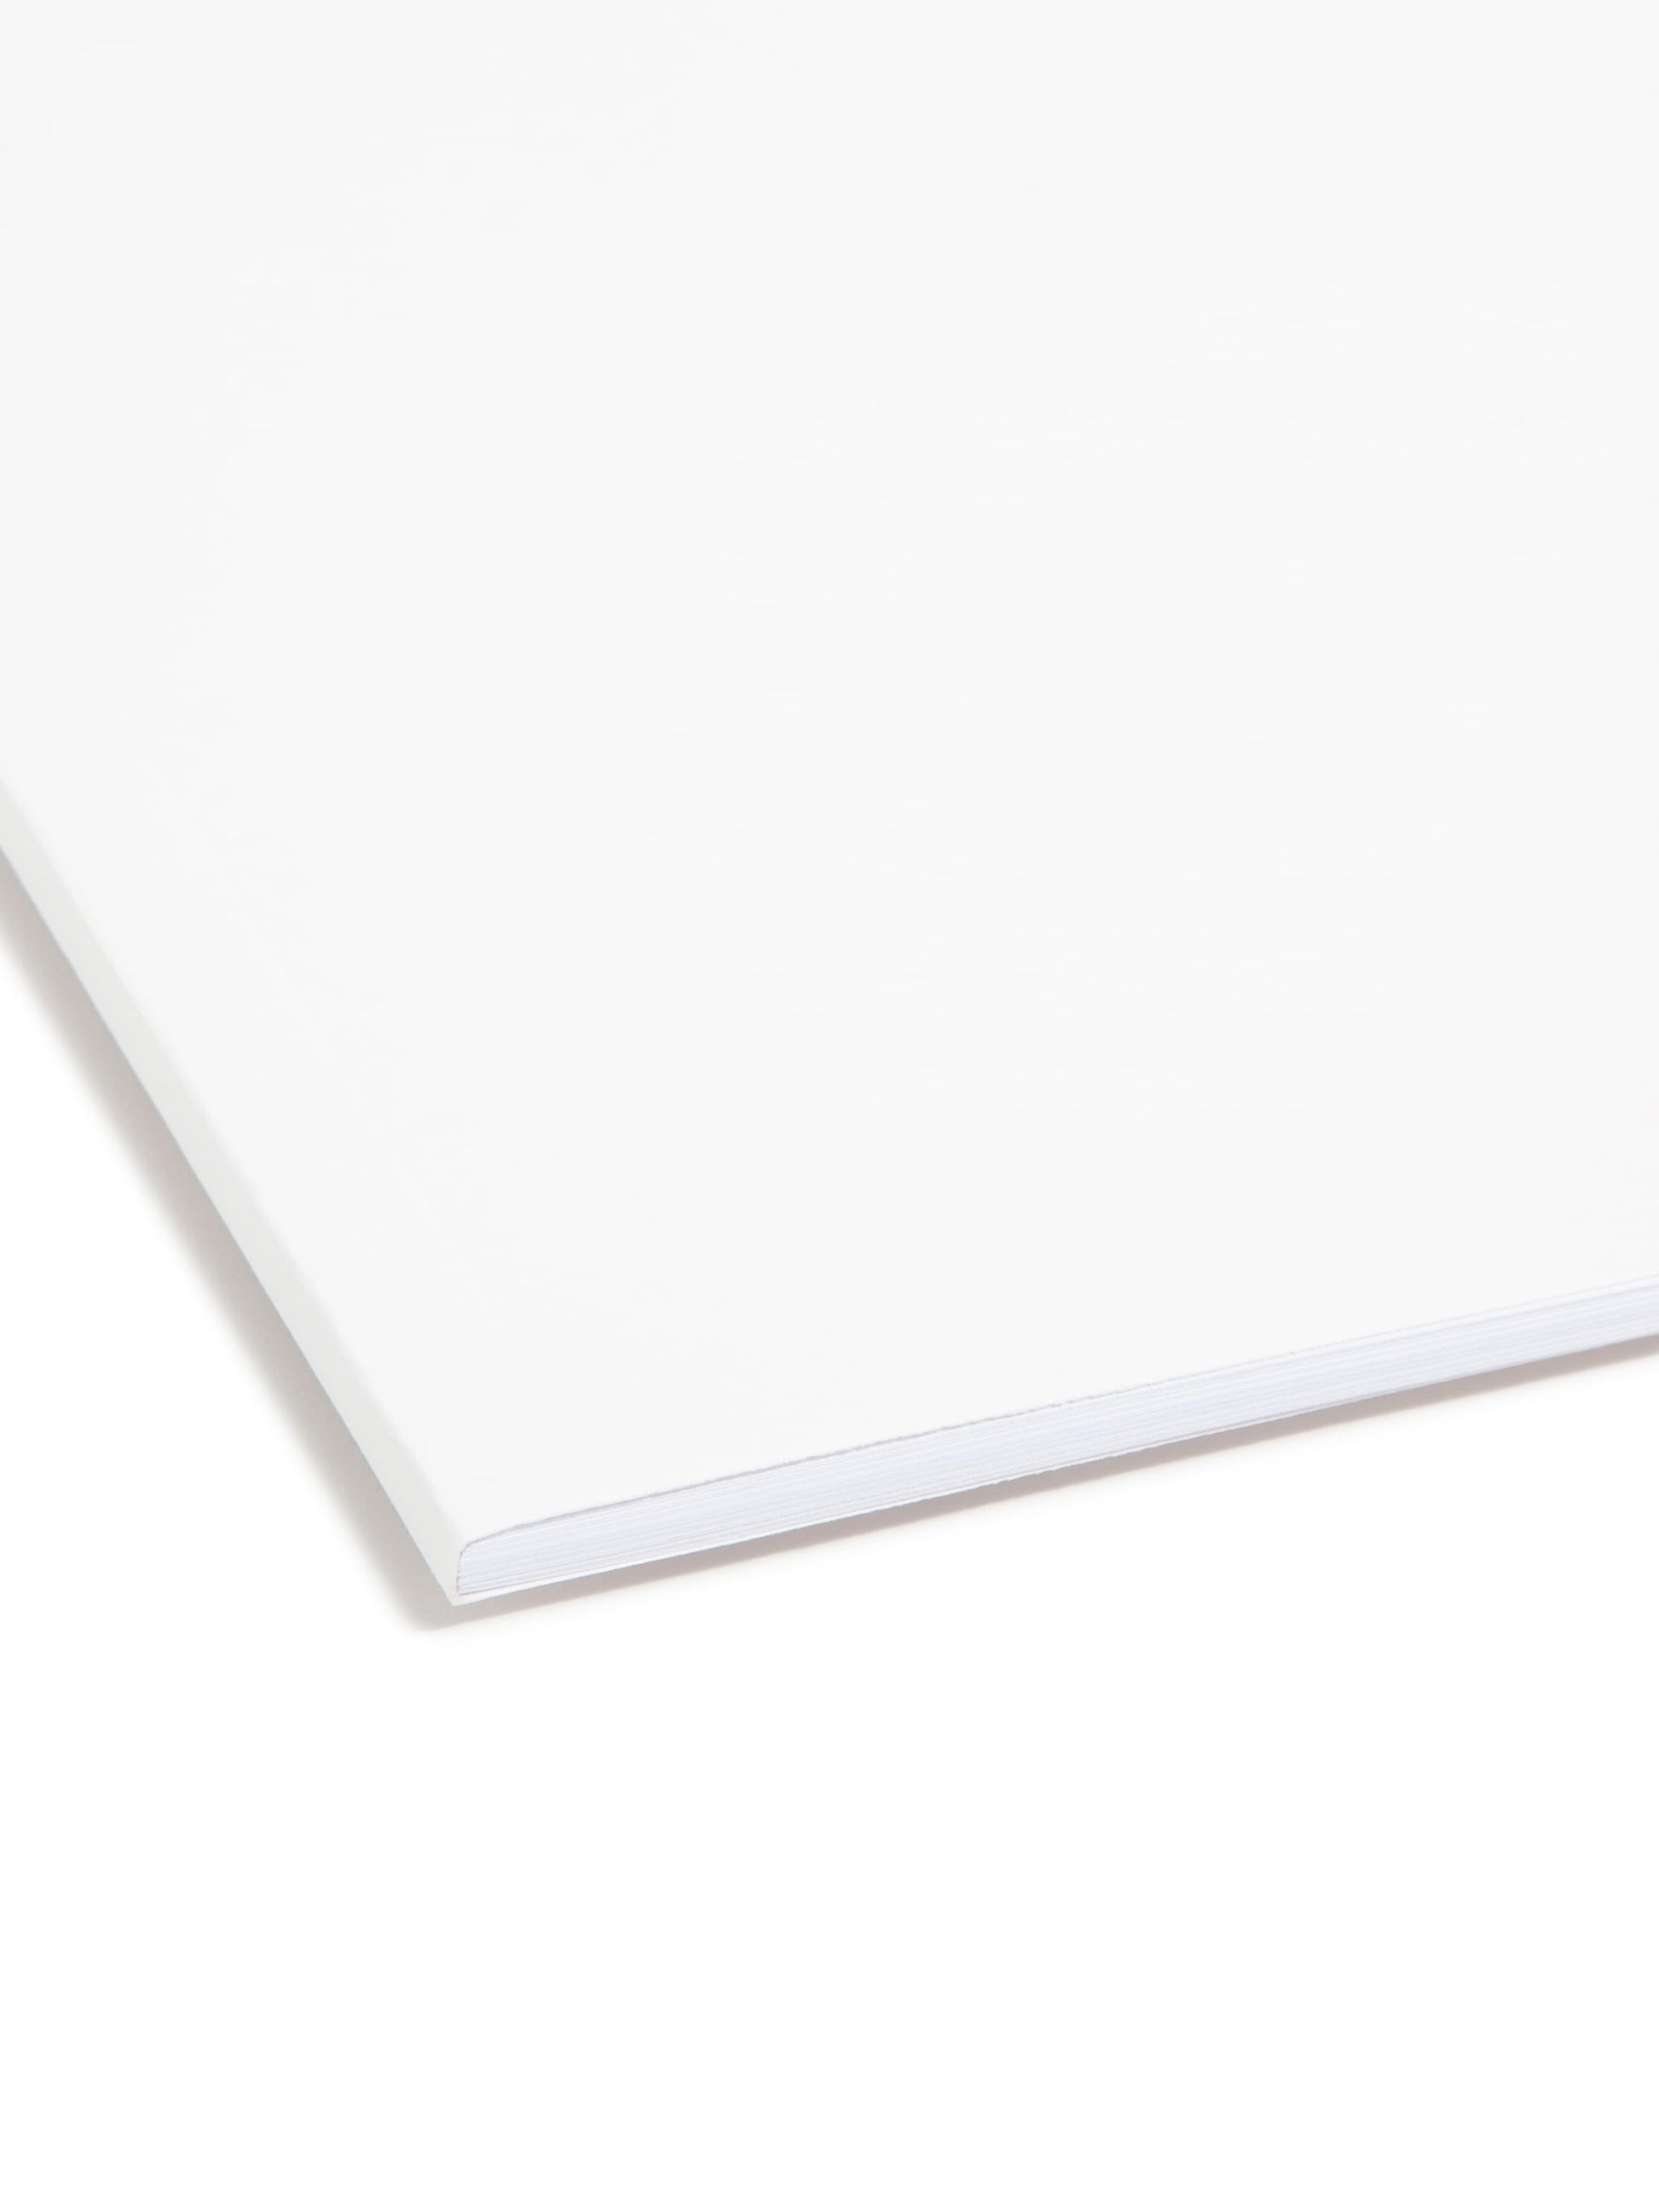 Reversible Printed Tab Fastener File Folders, Ivory Color, Legal Size, Set of 50, 086486195706